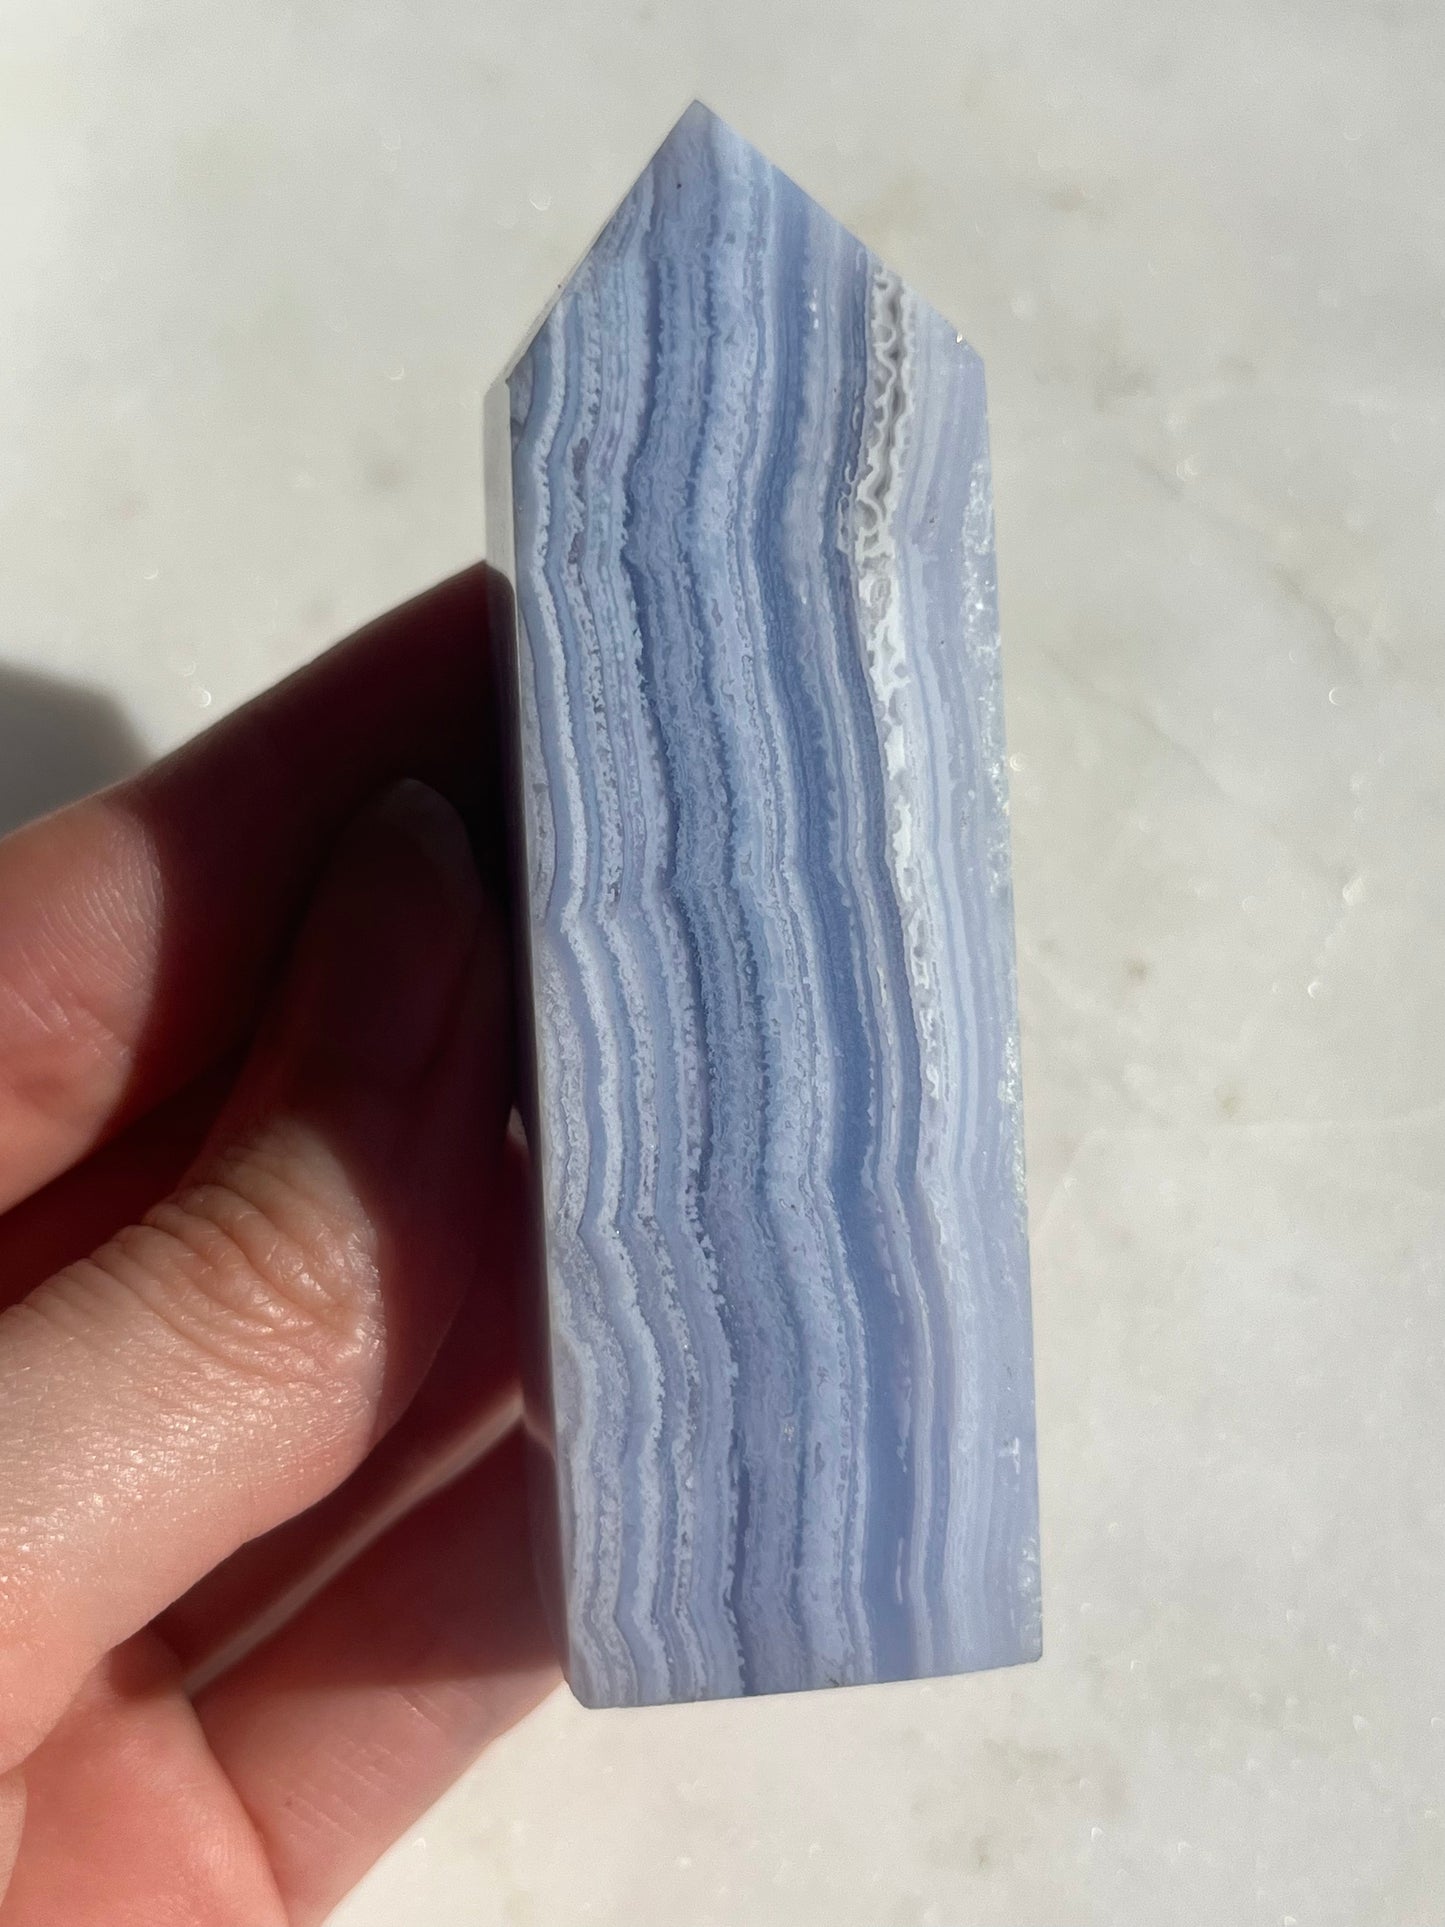 A Grade Blue Lace Agate Tower w/ White Dendritic Inclusions #1